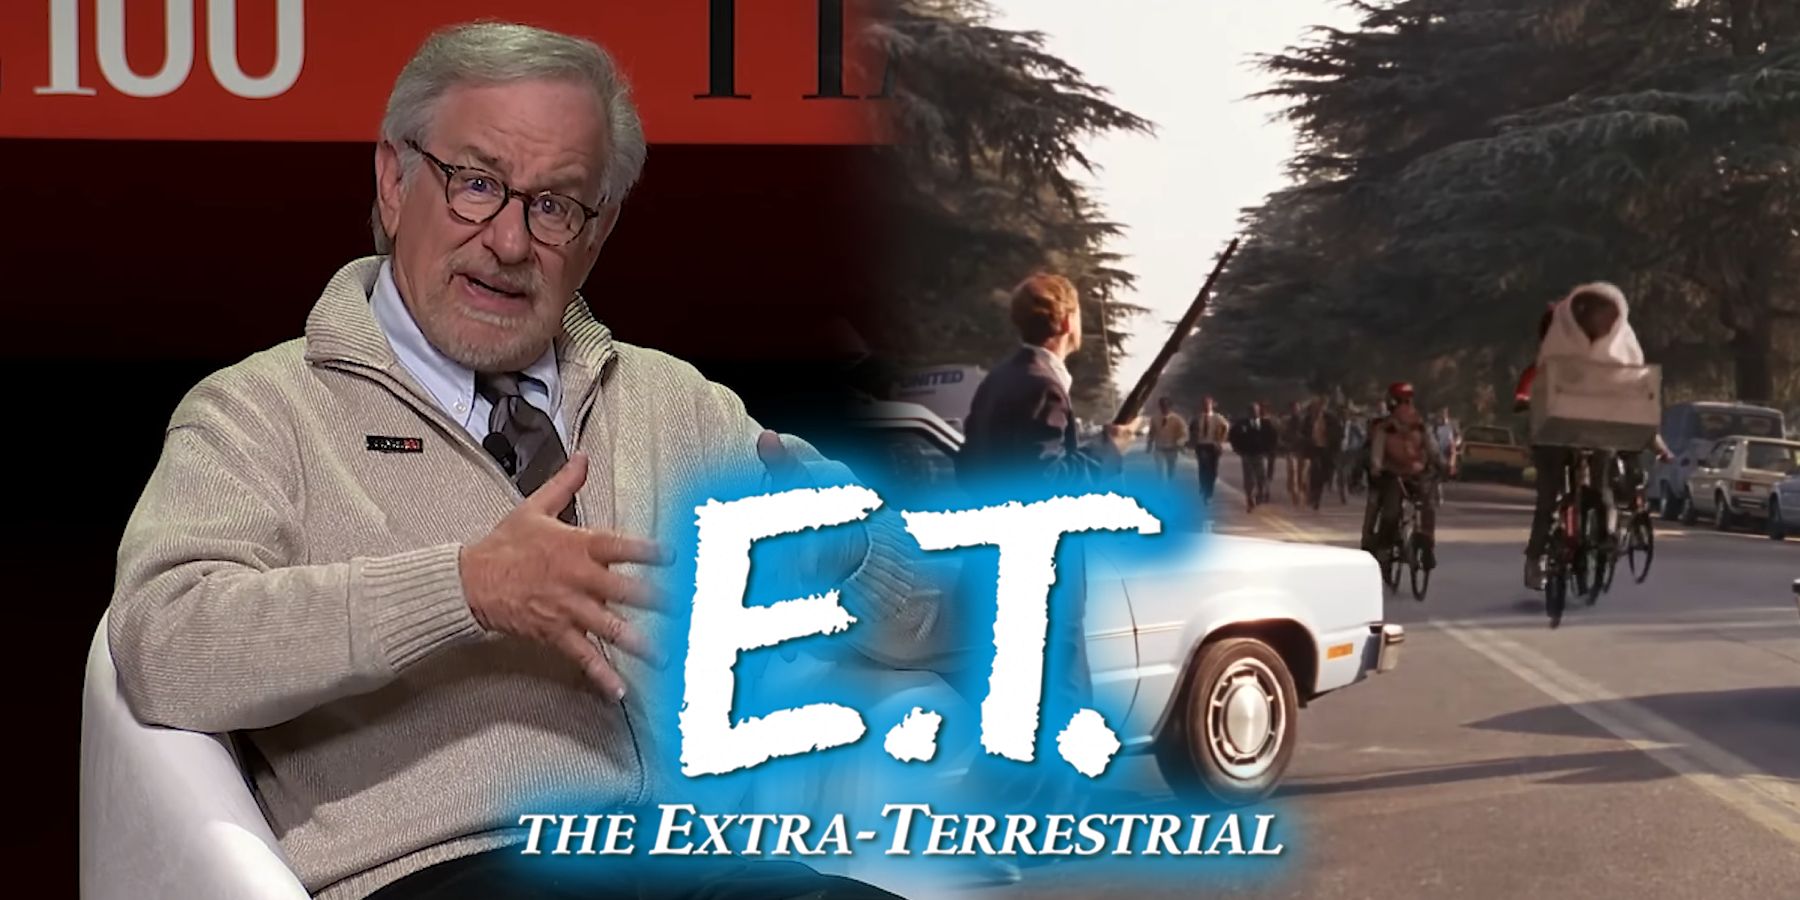 Steven Spielberg interview E.T. the Extra-Terrestrial guns walkie-talkies